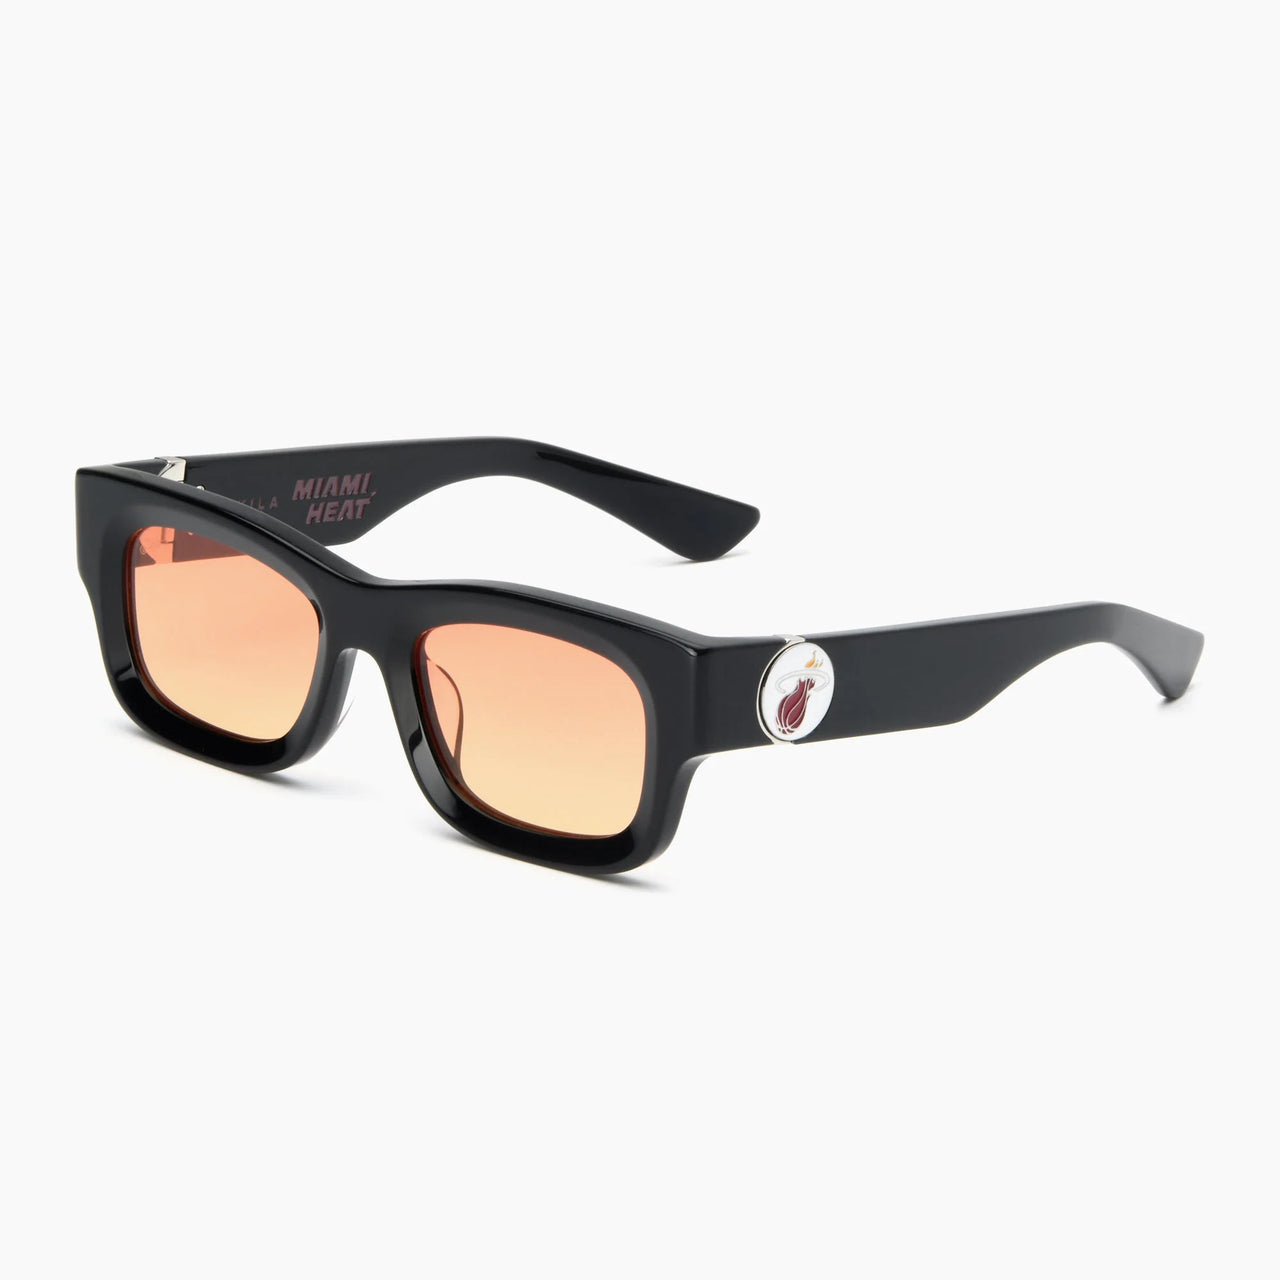 Jubilee x Miami Heat Sunglasses - Black/Miami Sunset